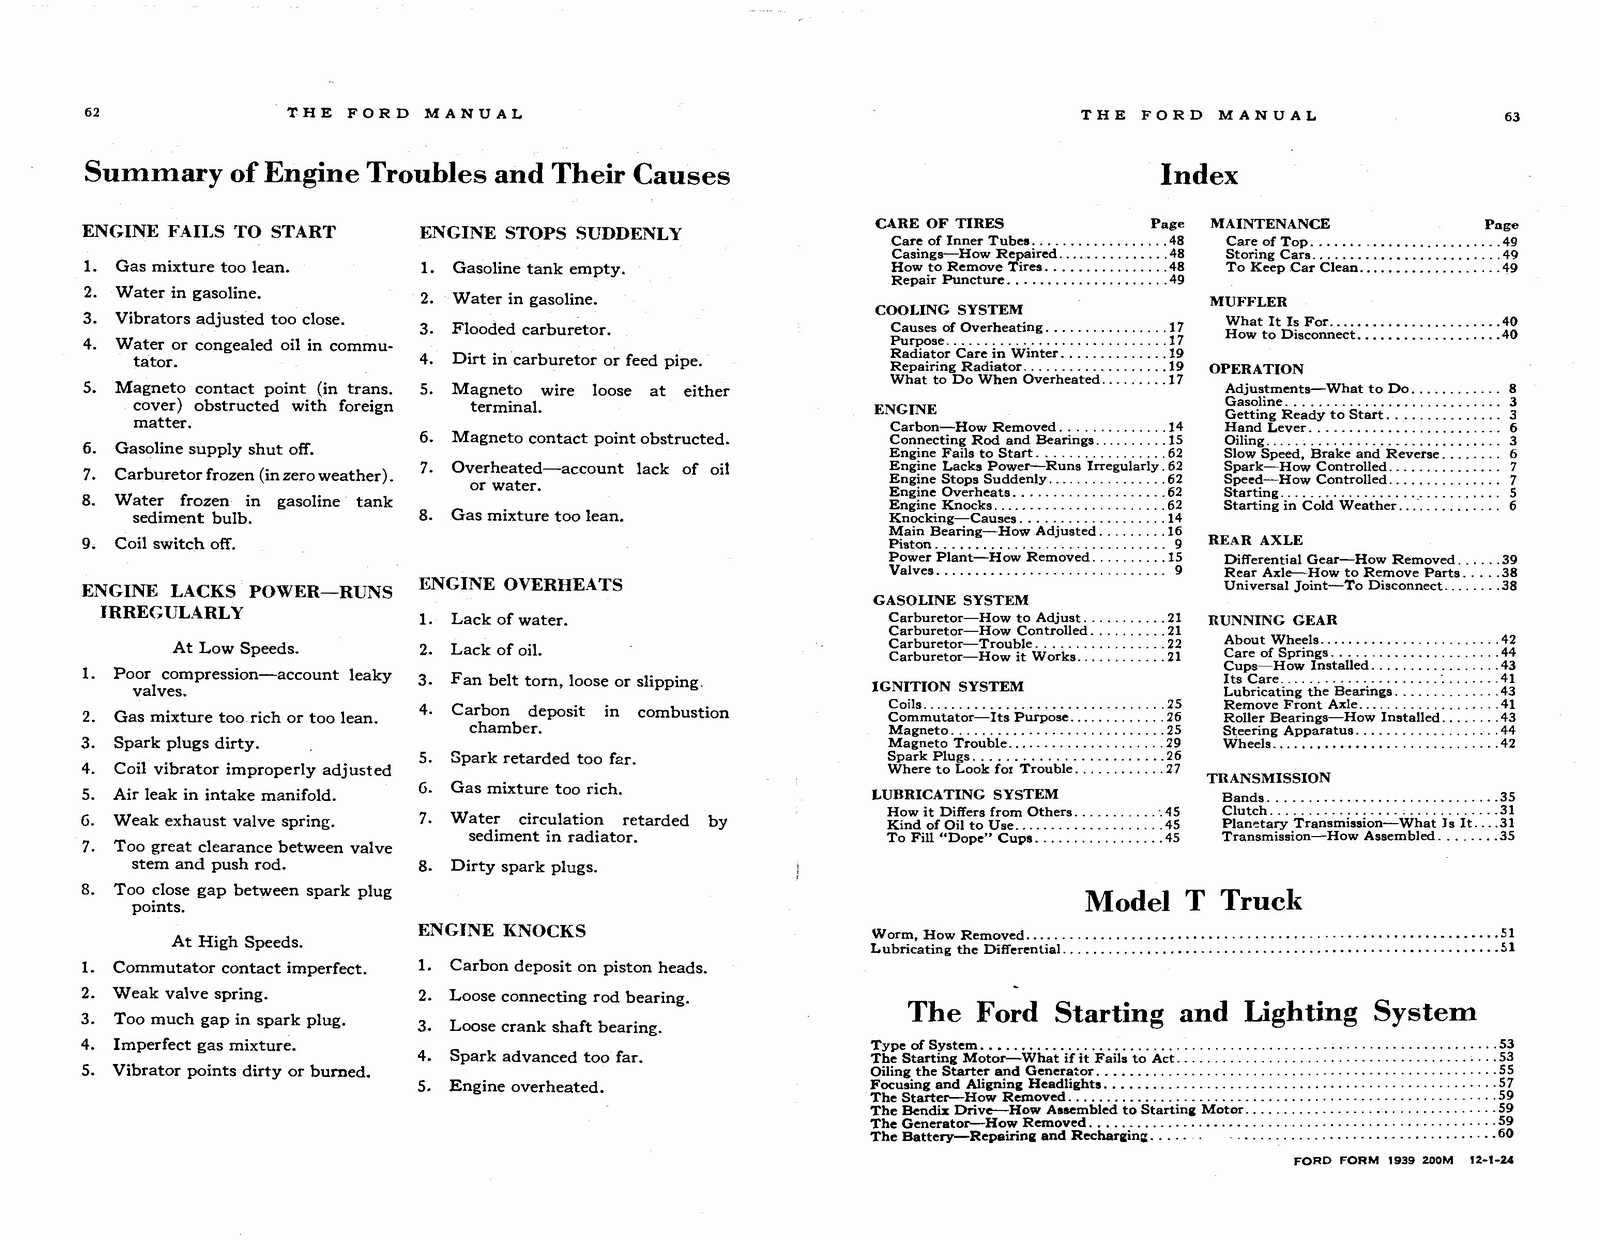 n_1925 Ford Owners Manual-62-63.jpg